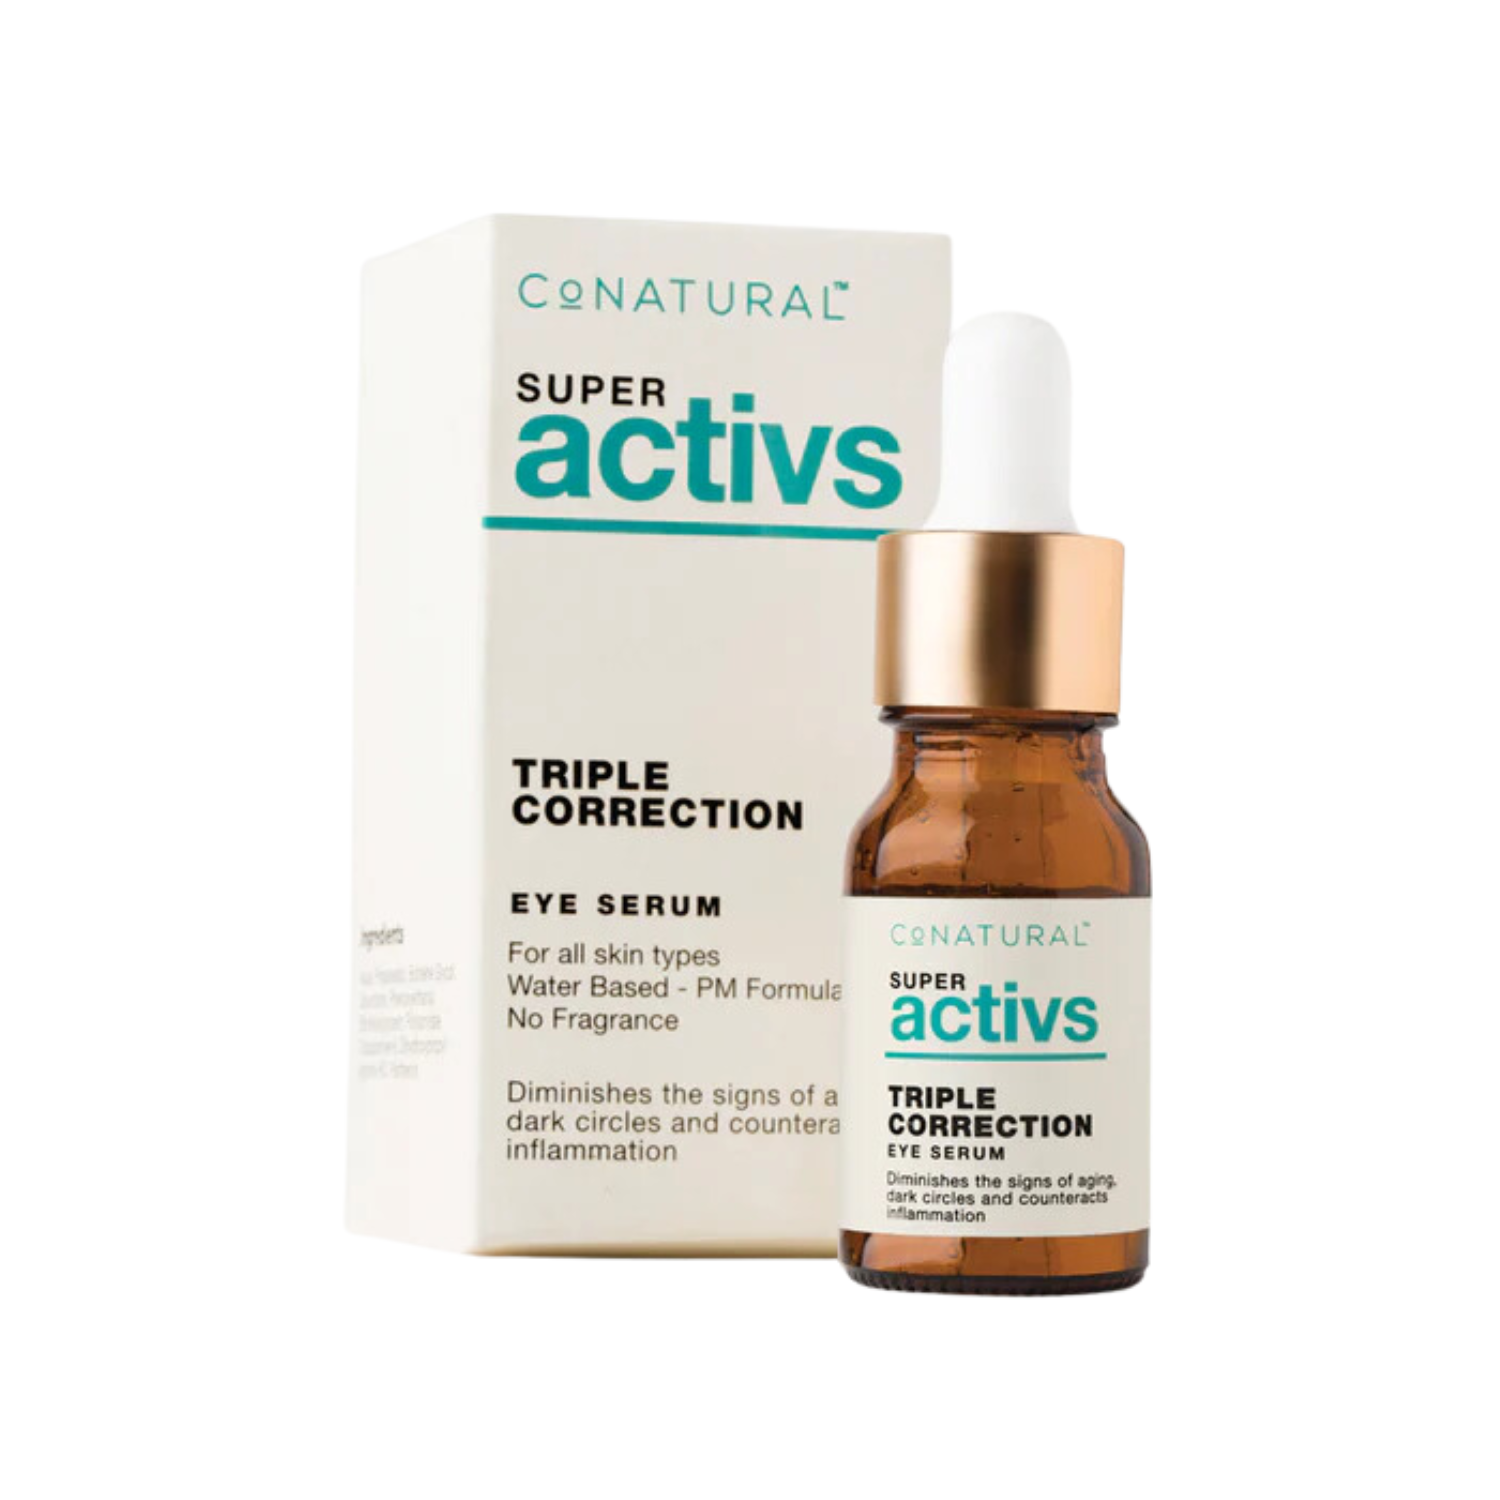 co-natural-super-activs-triple-correction-eye-serum-10ml